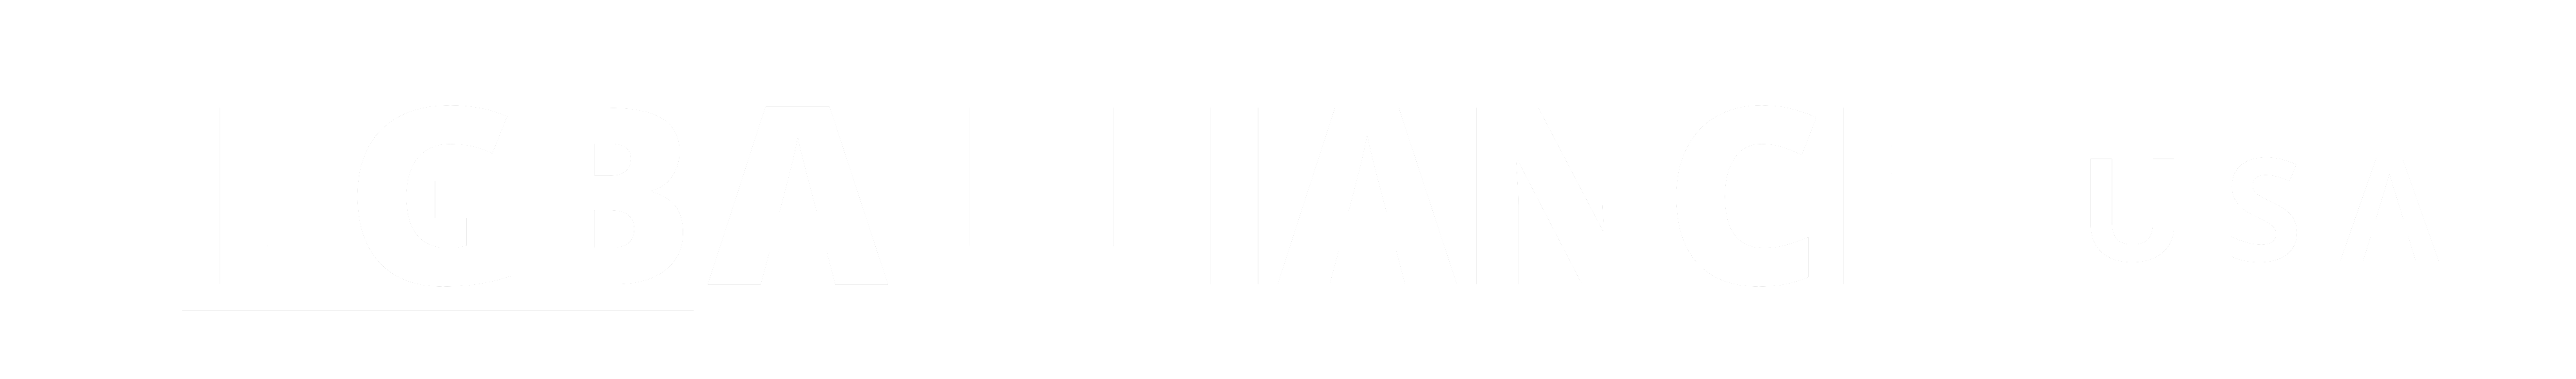 LGB Alliance USA logo